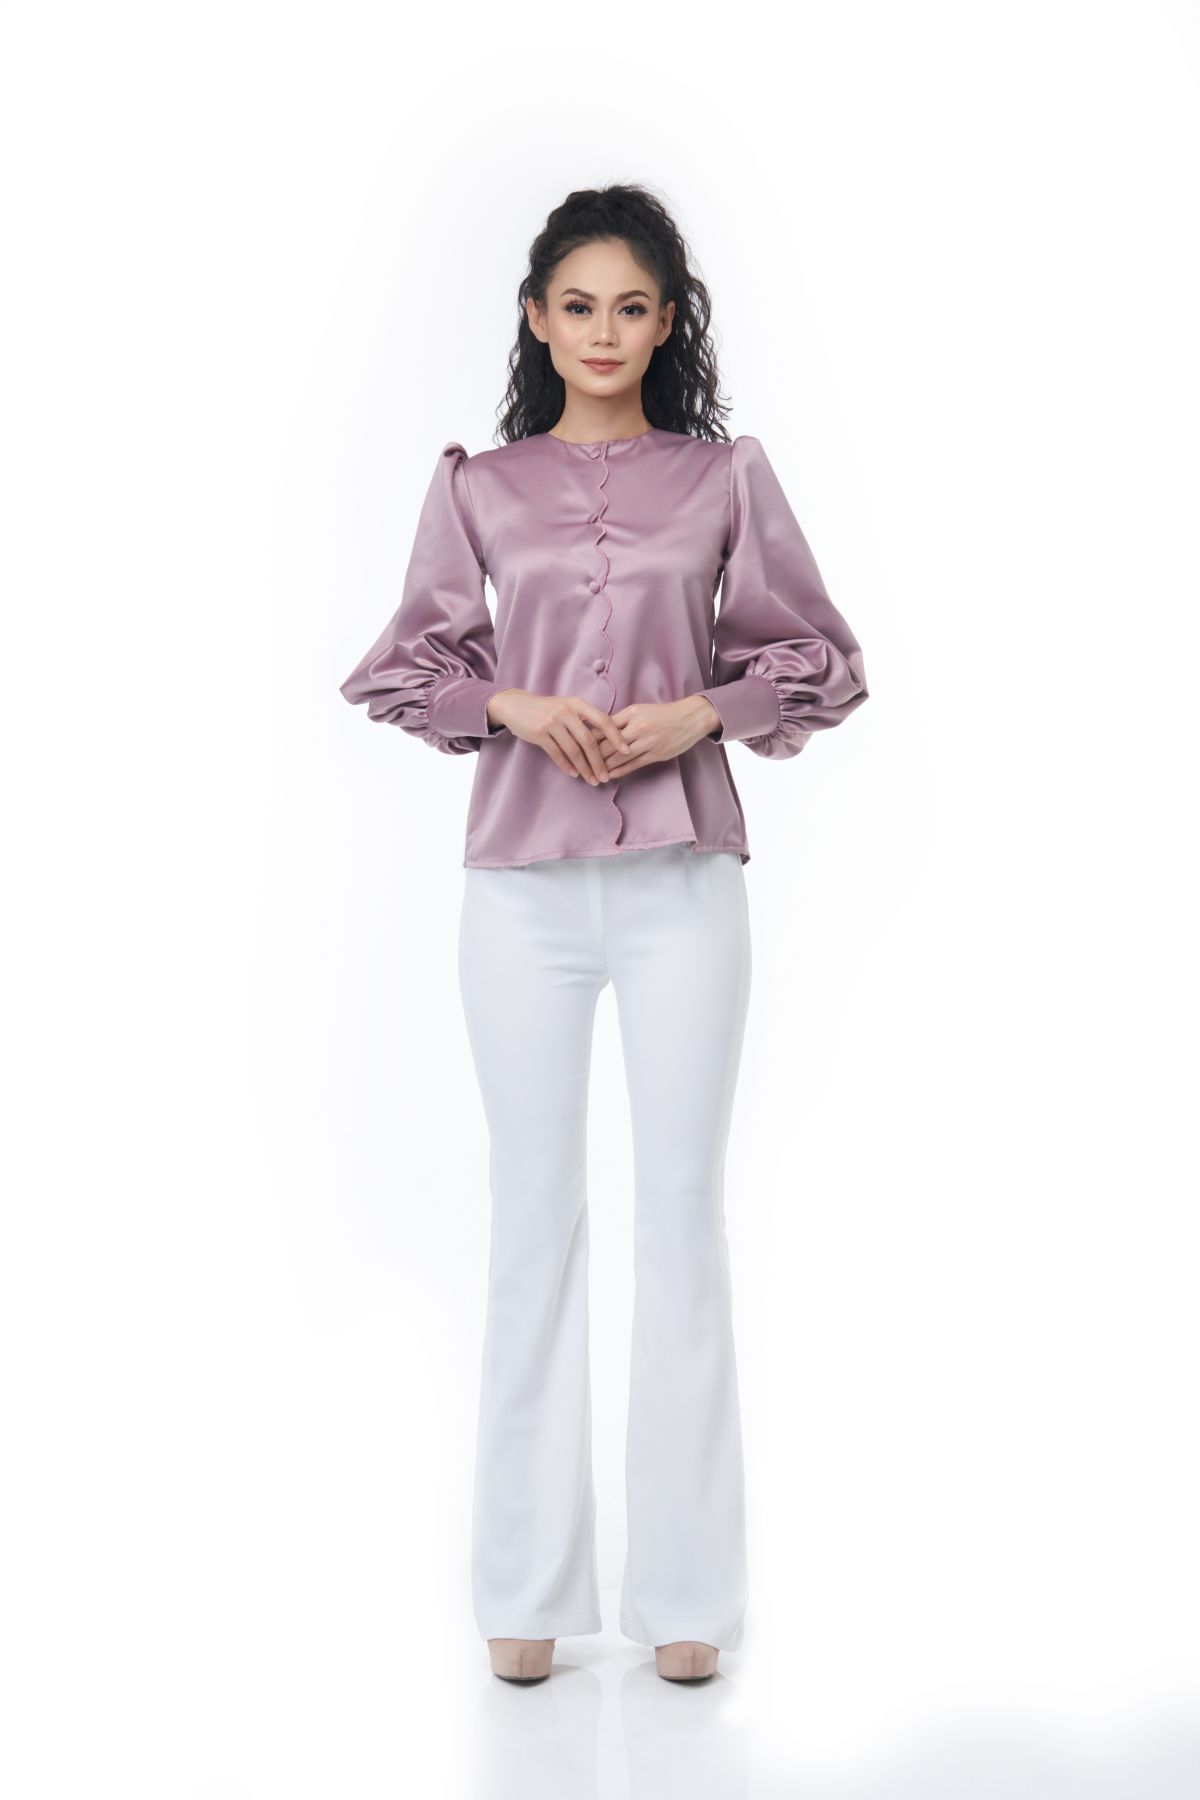 Madeleine in Misty Rose | Mekkembang - Cotton Fashion Exclusive Boutique